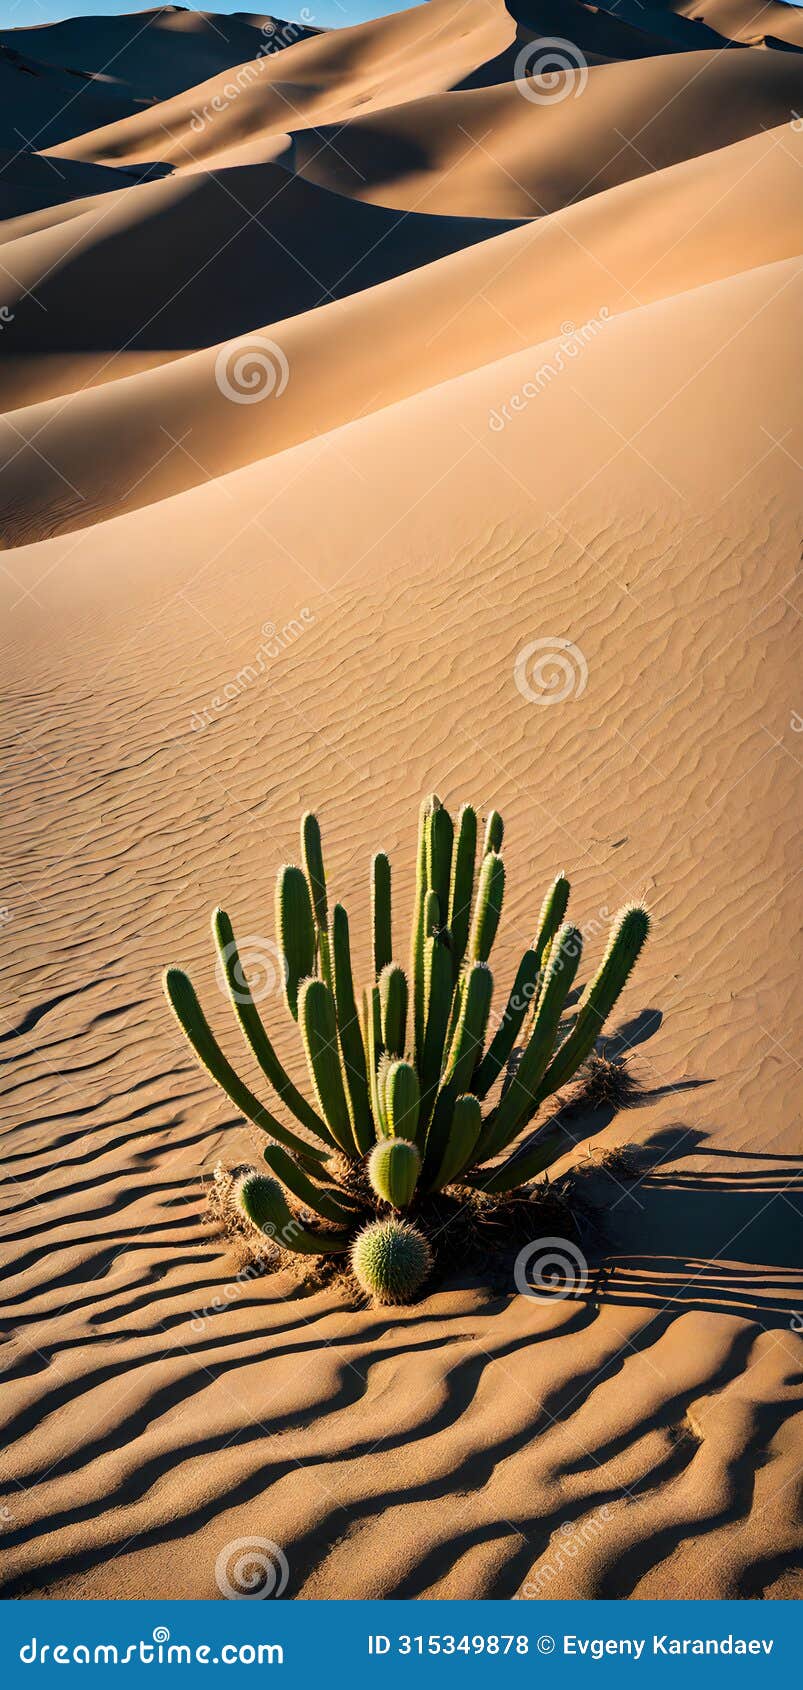 dslr capture of a thriving cactus amid desolate desert